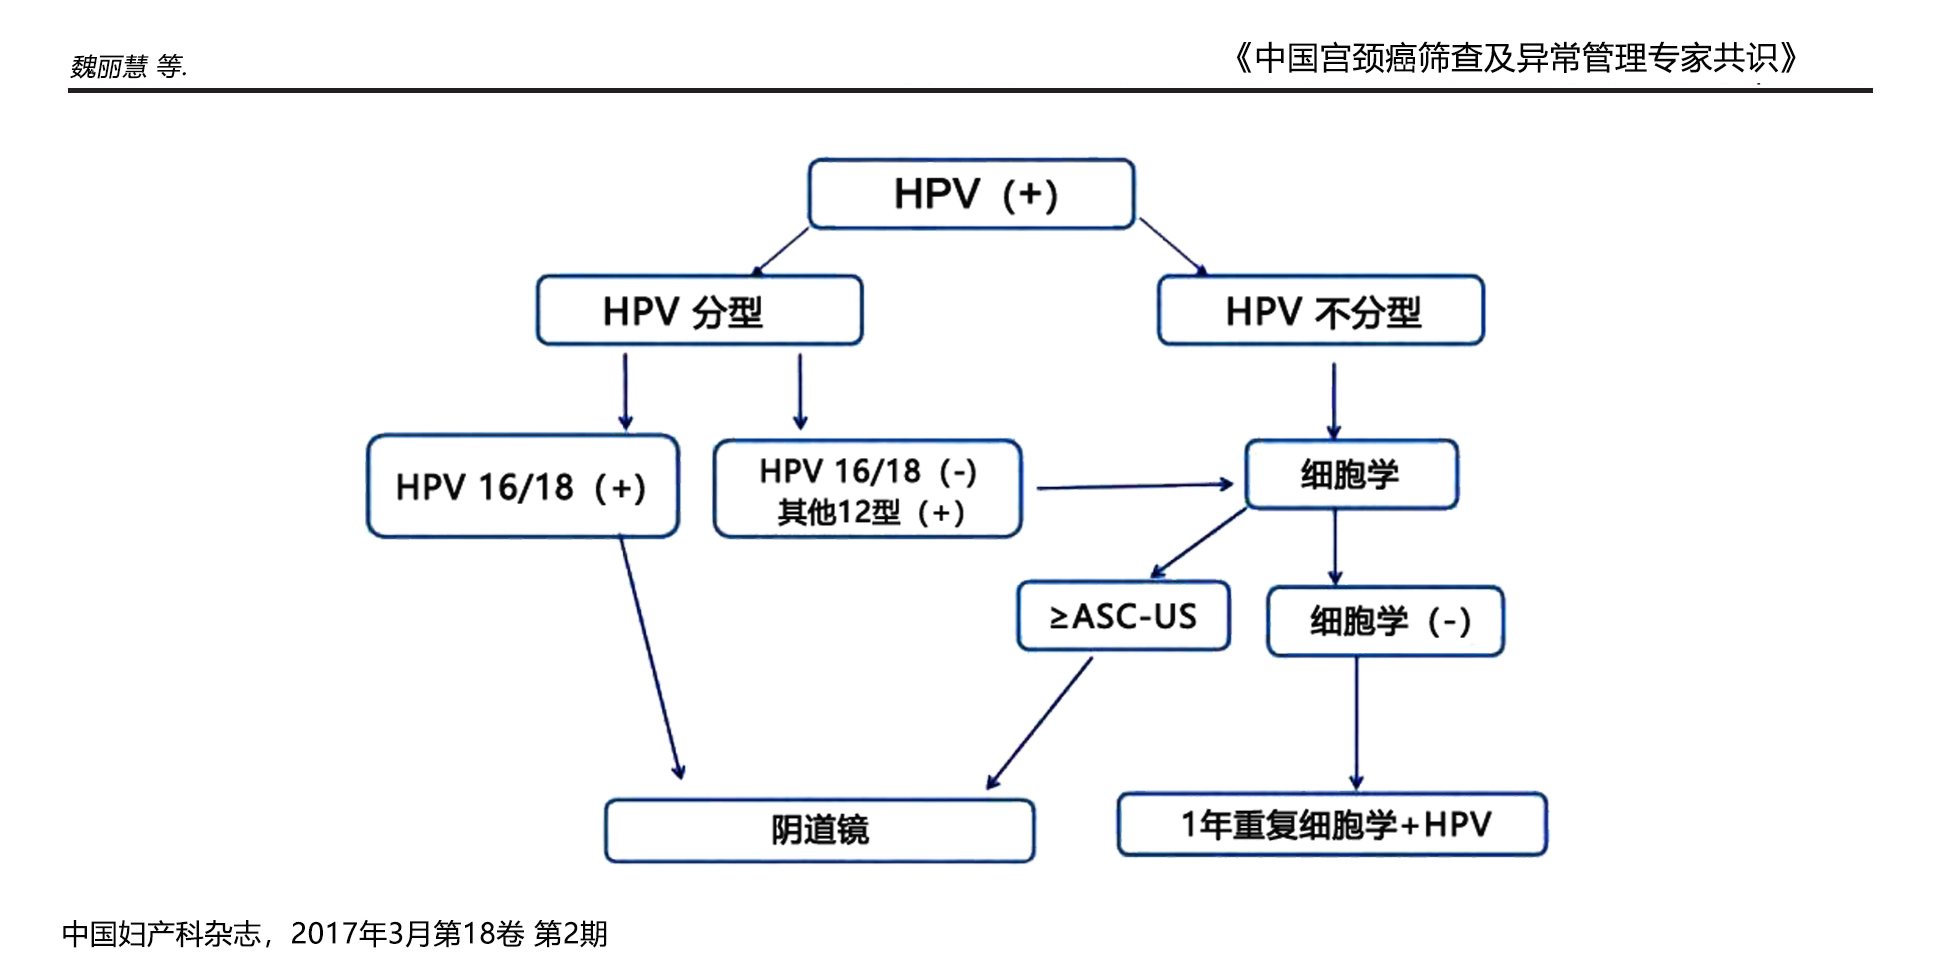 hpv检测在中国宫颈癌筛查策略中的价值